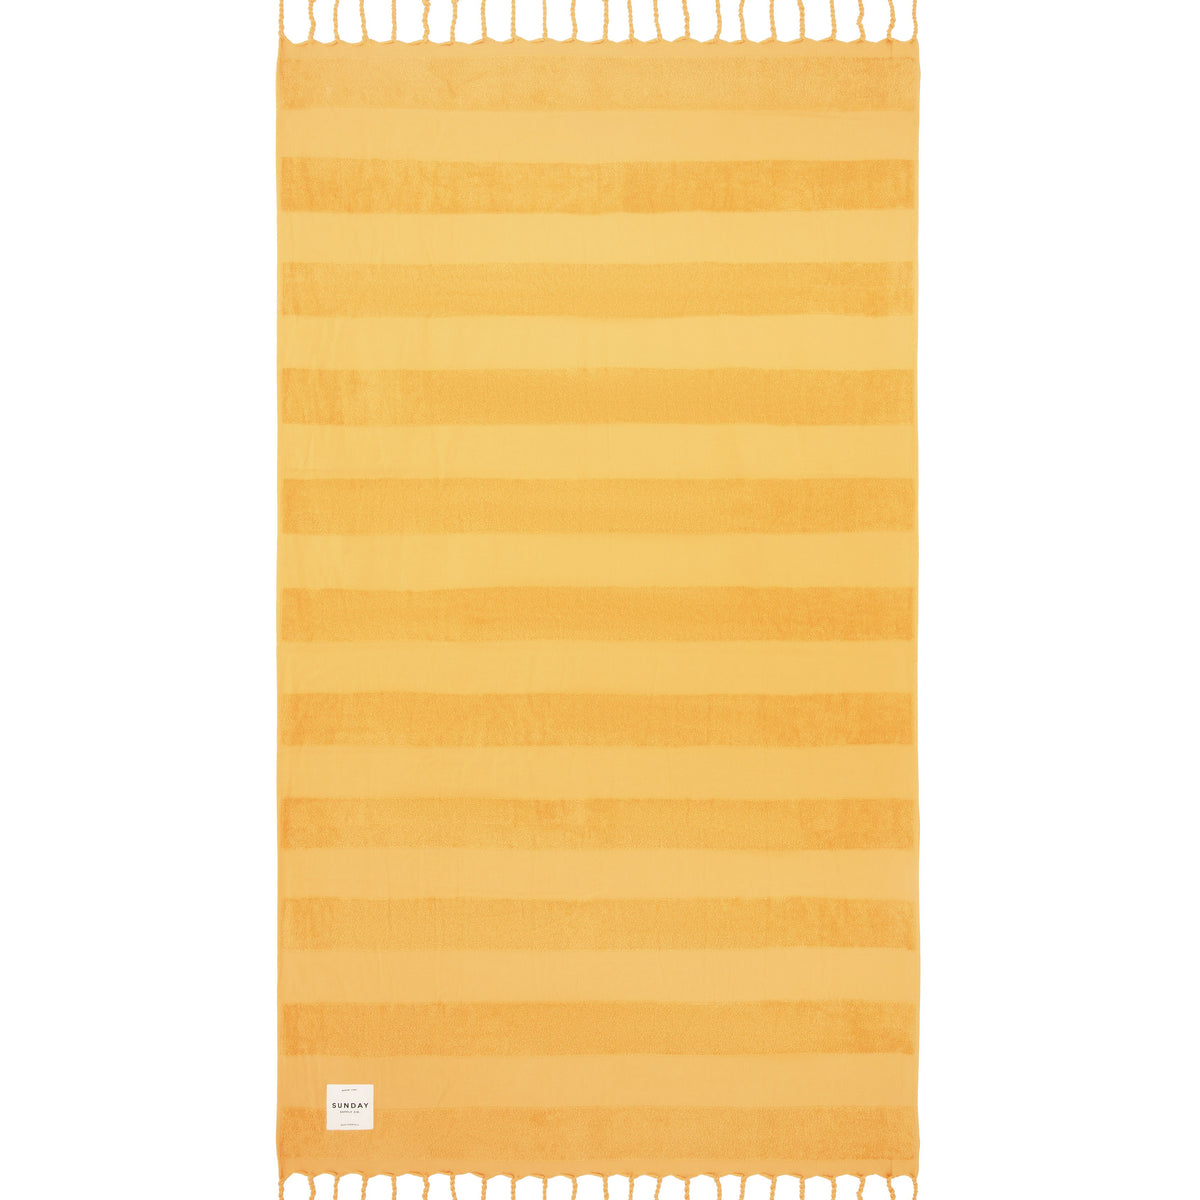 Gold Case Turkish Beach Towel Set of 5-100% Cotton - 71x40 Inches XXL Oversized - Quick Dry Sand Free Turkish Towel - Lightweight Bath Towels